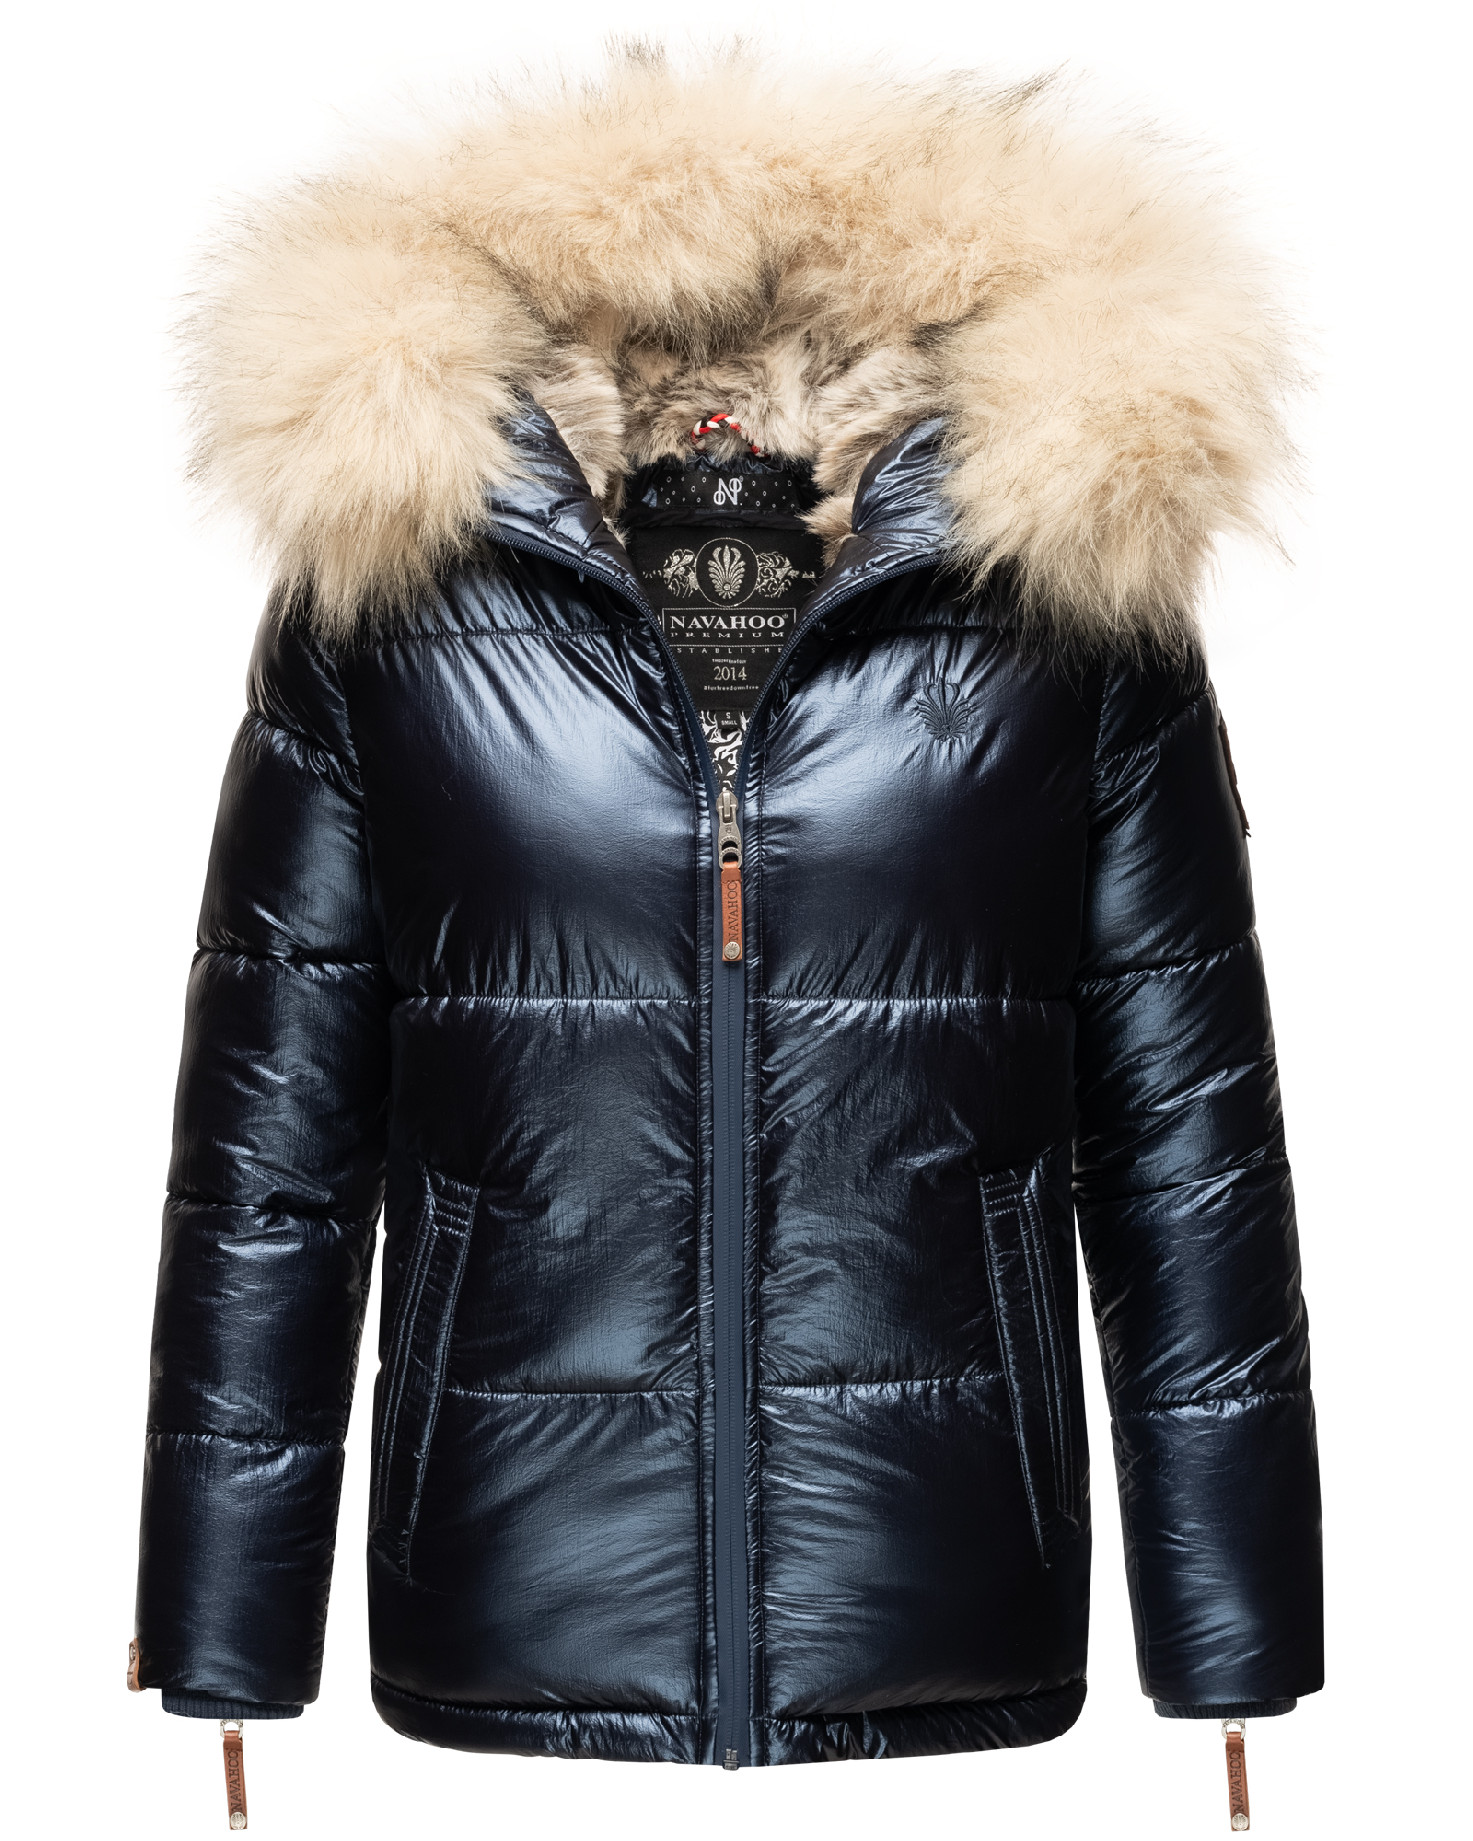 Dámská teplá zimní bunda s kožíškem Tikunaa Premium Navahoo - NAVY Velikost: XL